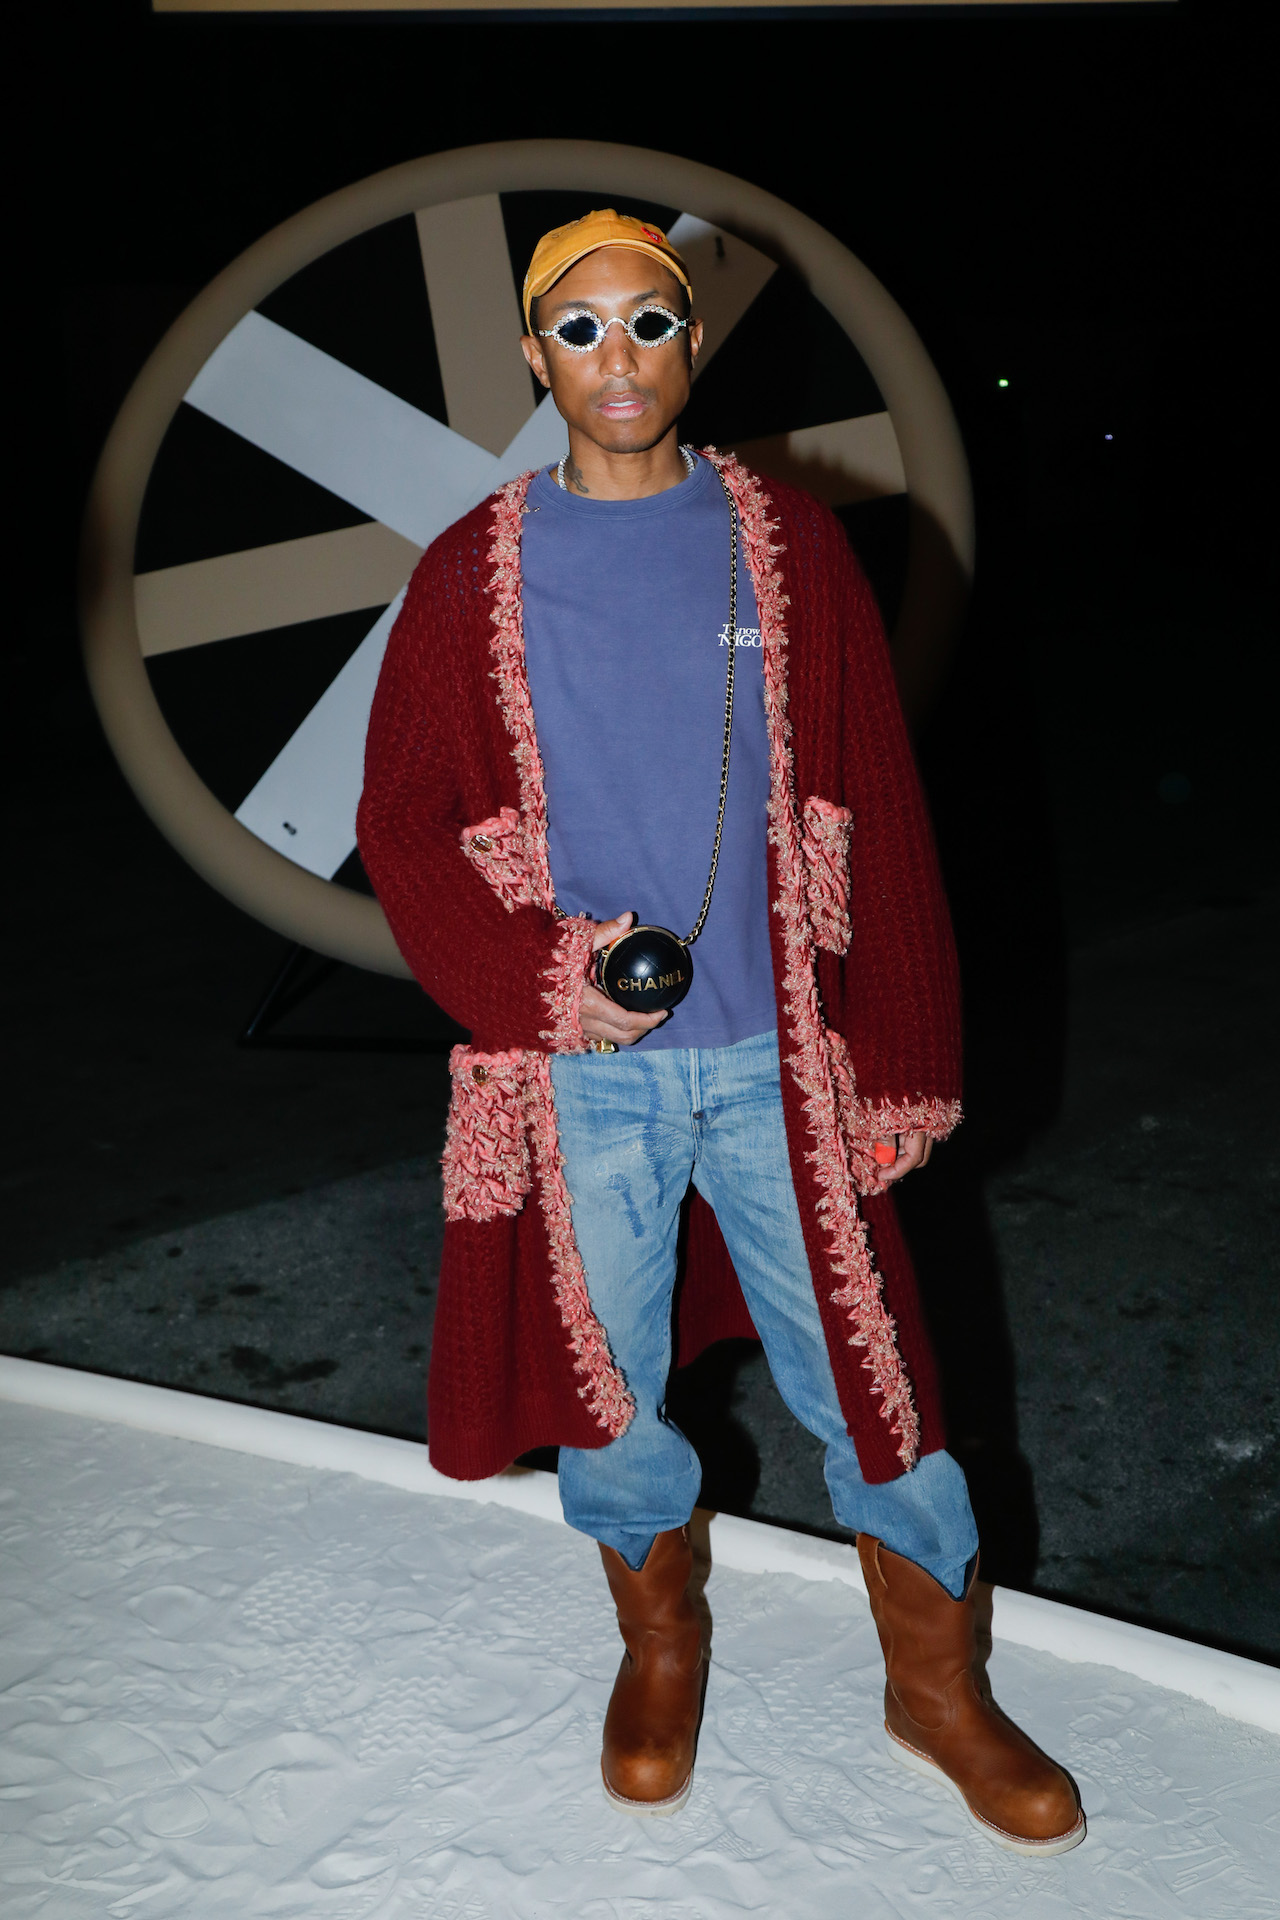 Inside Pharrell Williams's Stylish Trip to Dakar for the Chanel Show